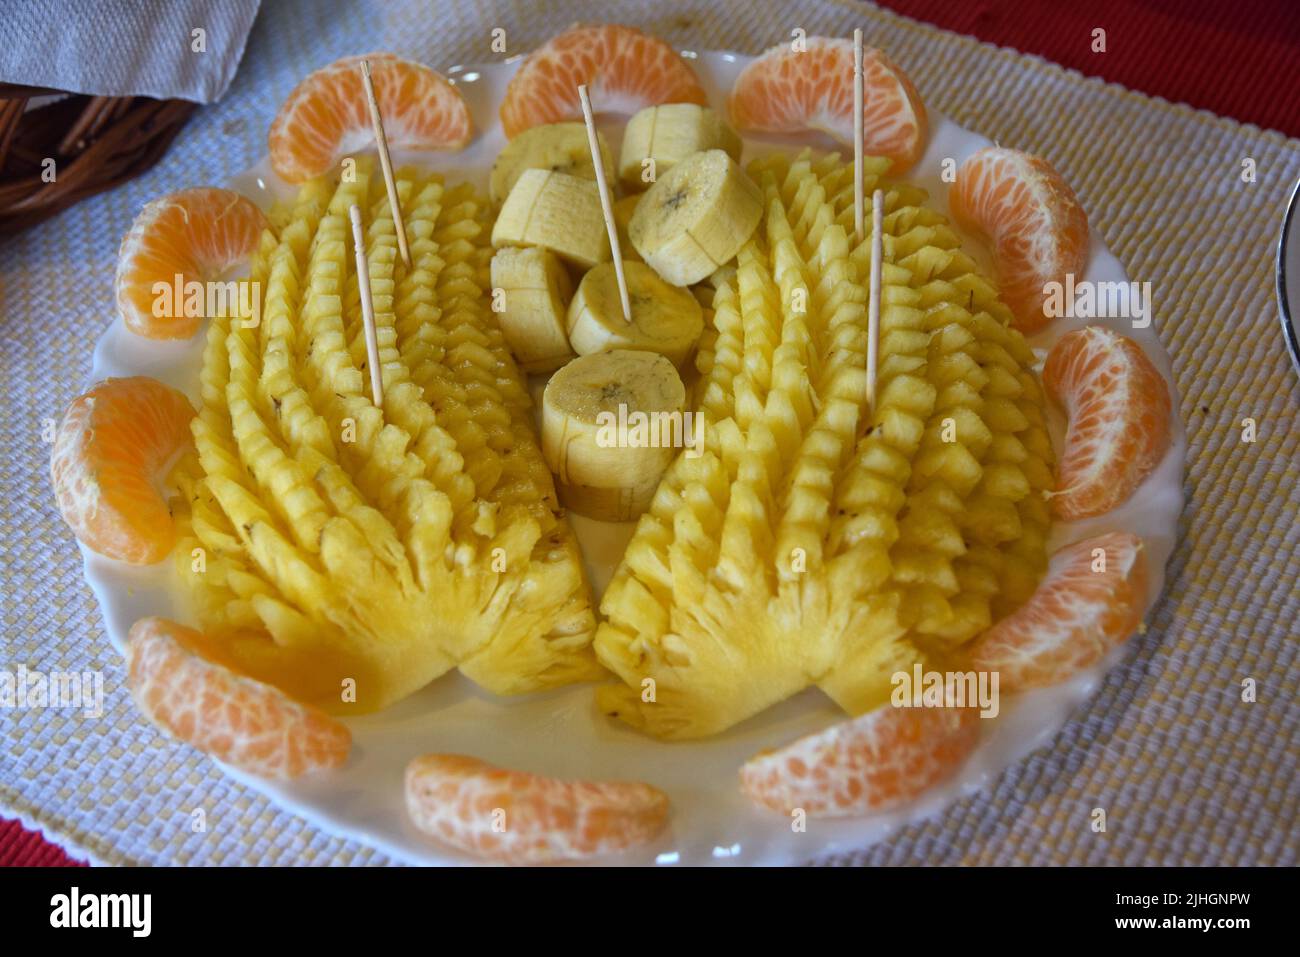 decorative fruits on plate, kerala, india Stock Photo